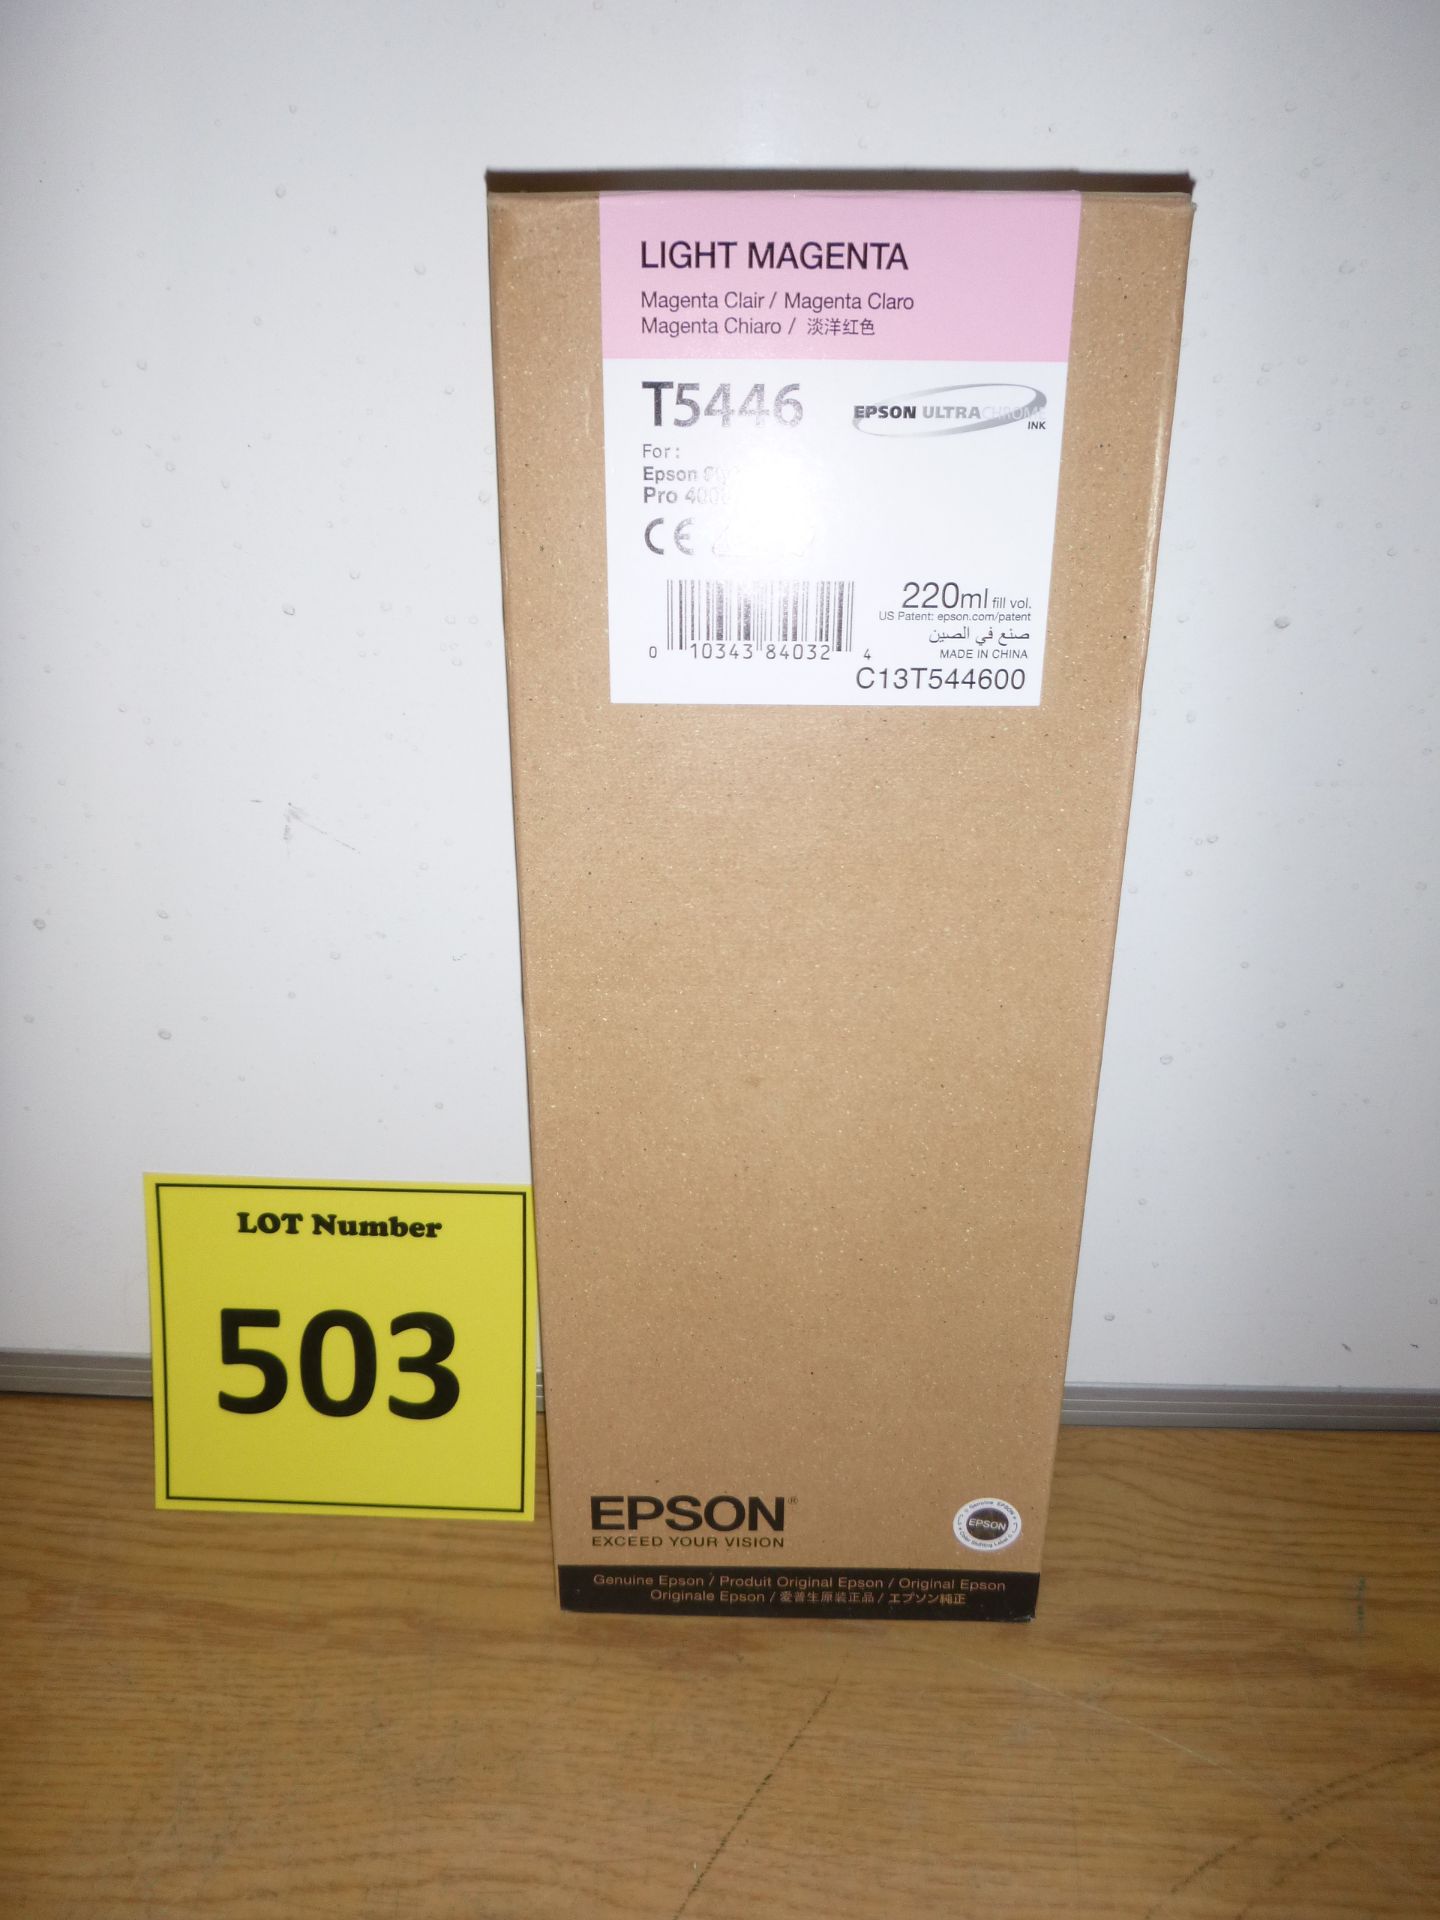 GENUINE Epson T5446 sealed light magenta cartridge for Epson Stylus Pro 4000 / 9600 printers